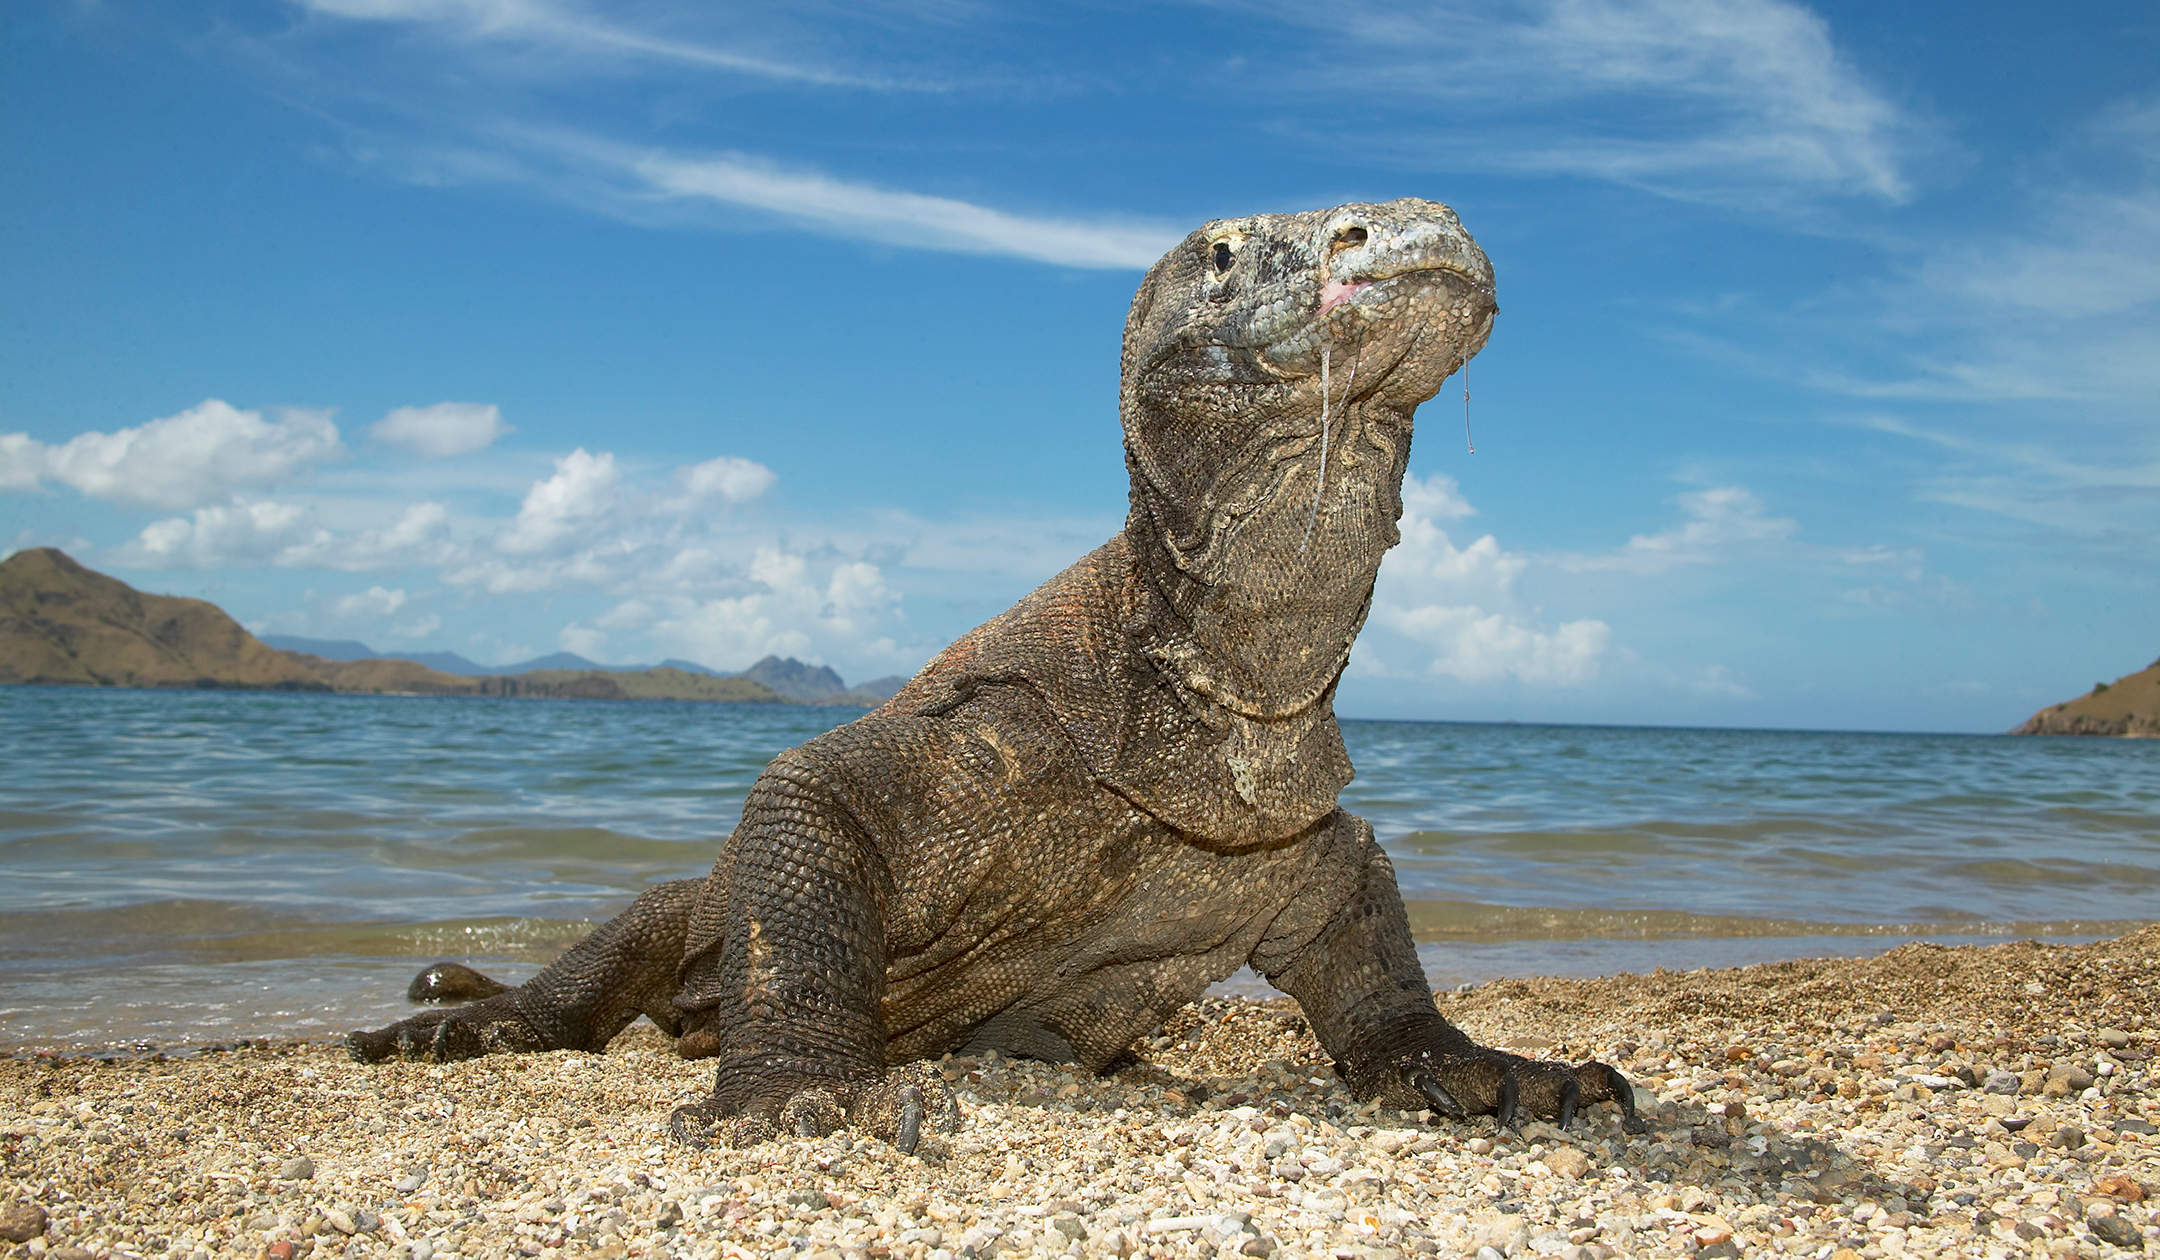 Komodo Dragon, the world's largest lizard, strolling a beach seeking food on Komodo Island in Indonesia.